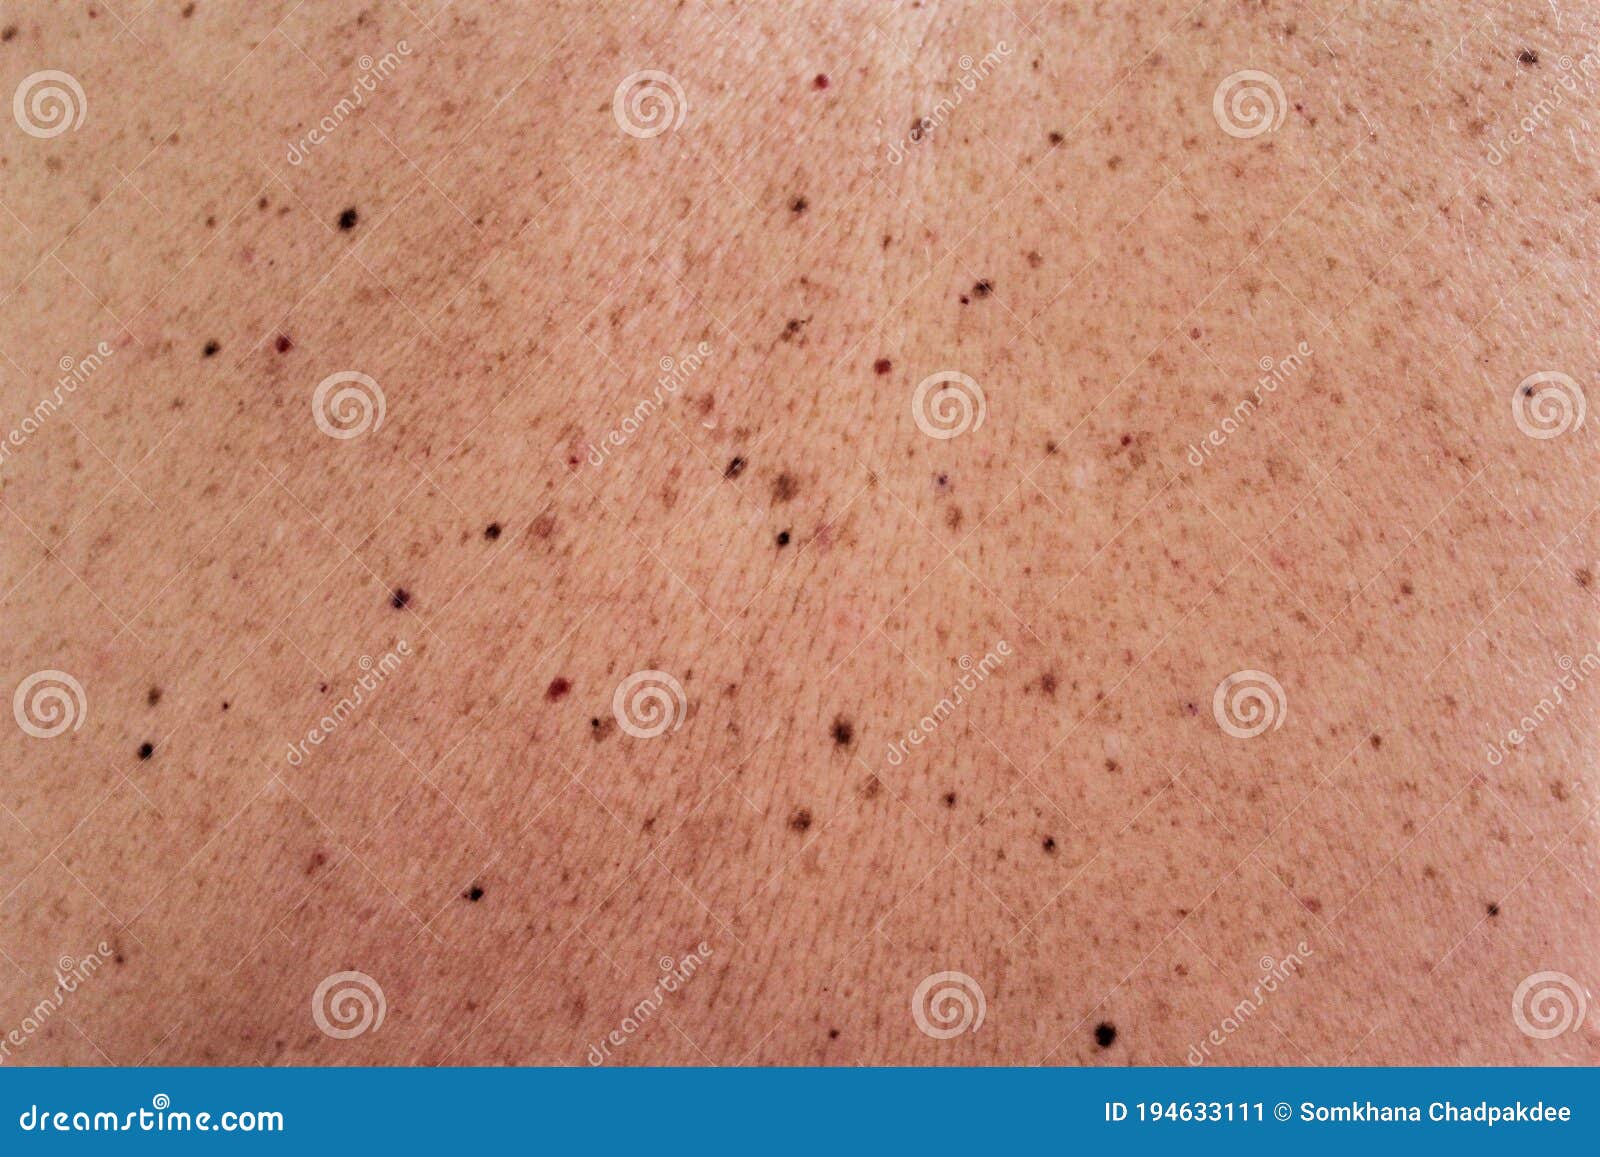 human skin texture stock photo